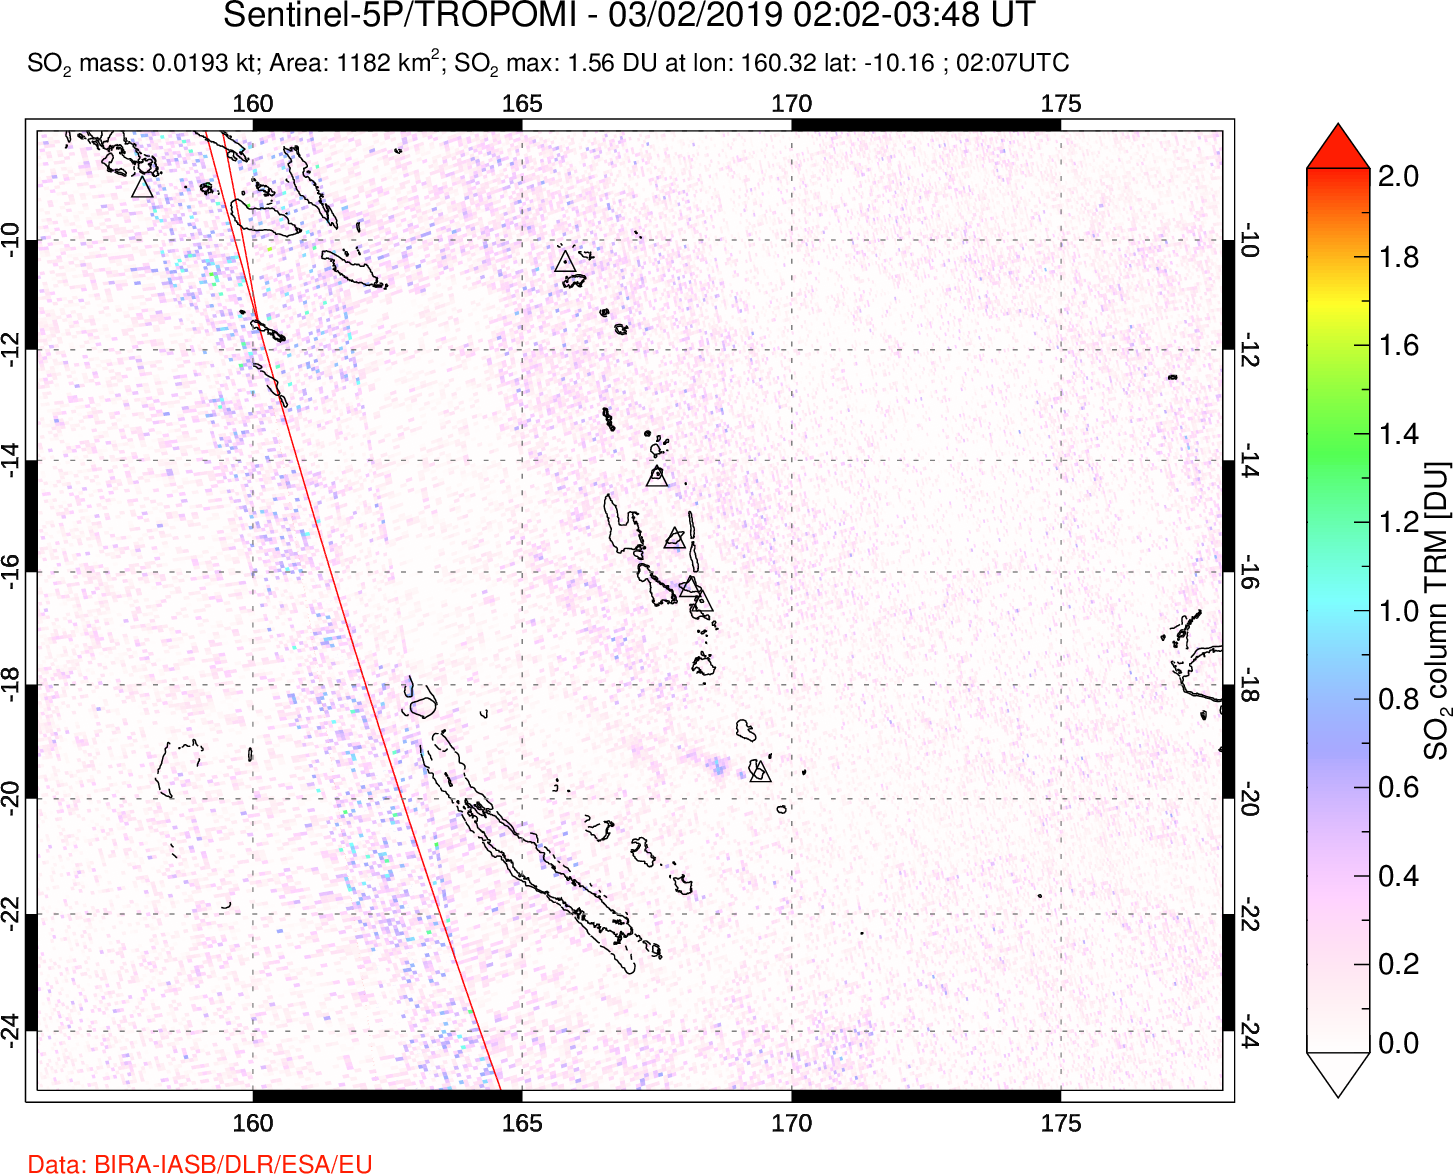 A sulfur dioxide image over Vanuatu, South Pacific on Mar 02, 2019.